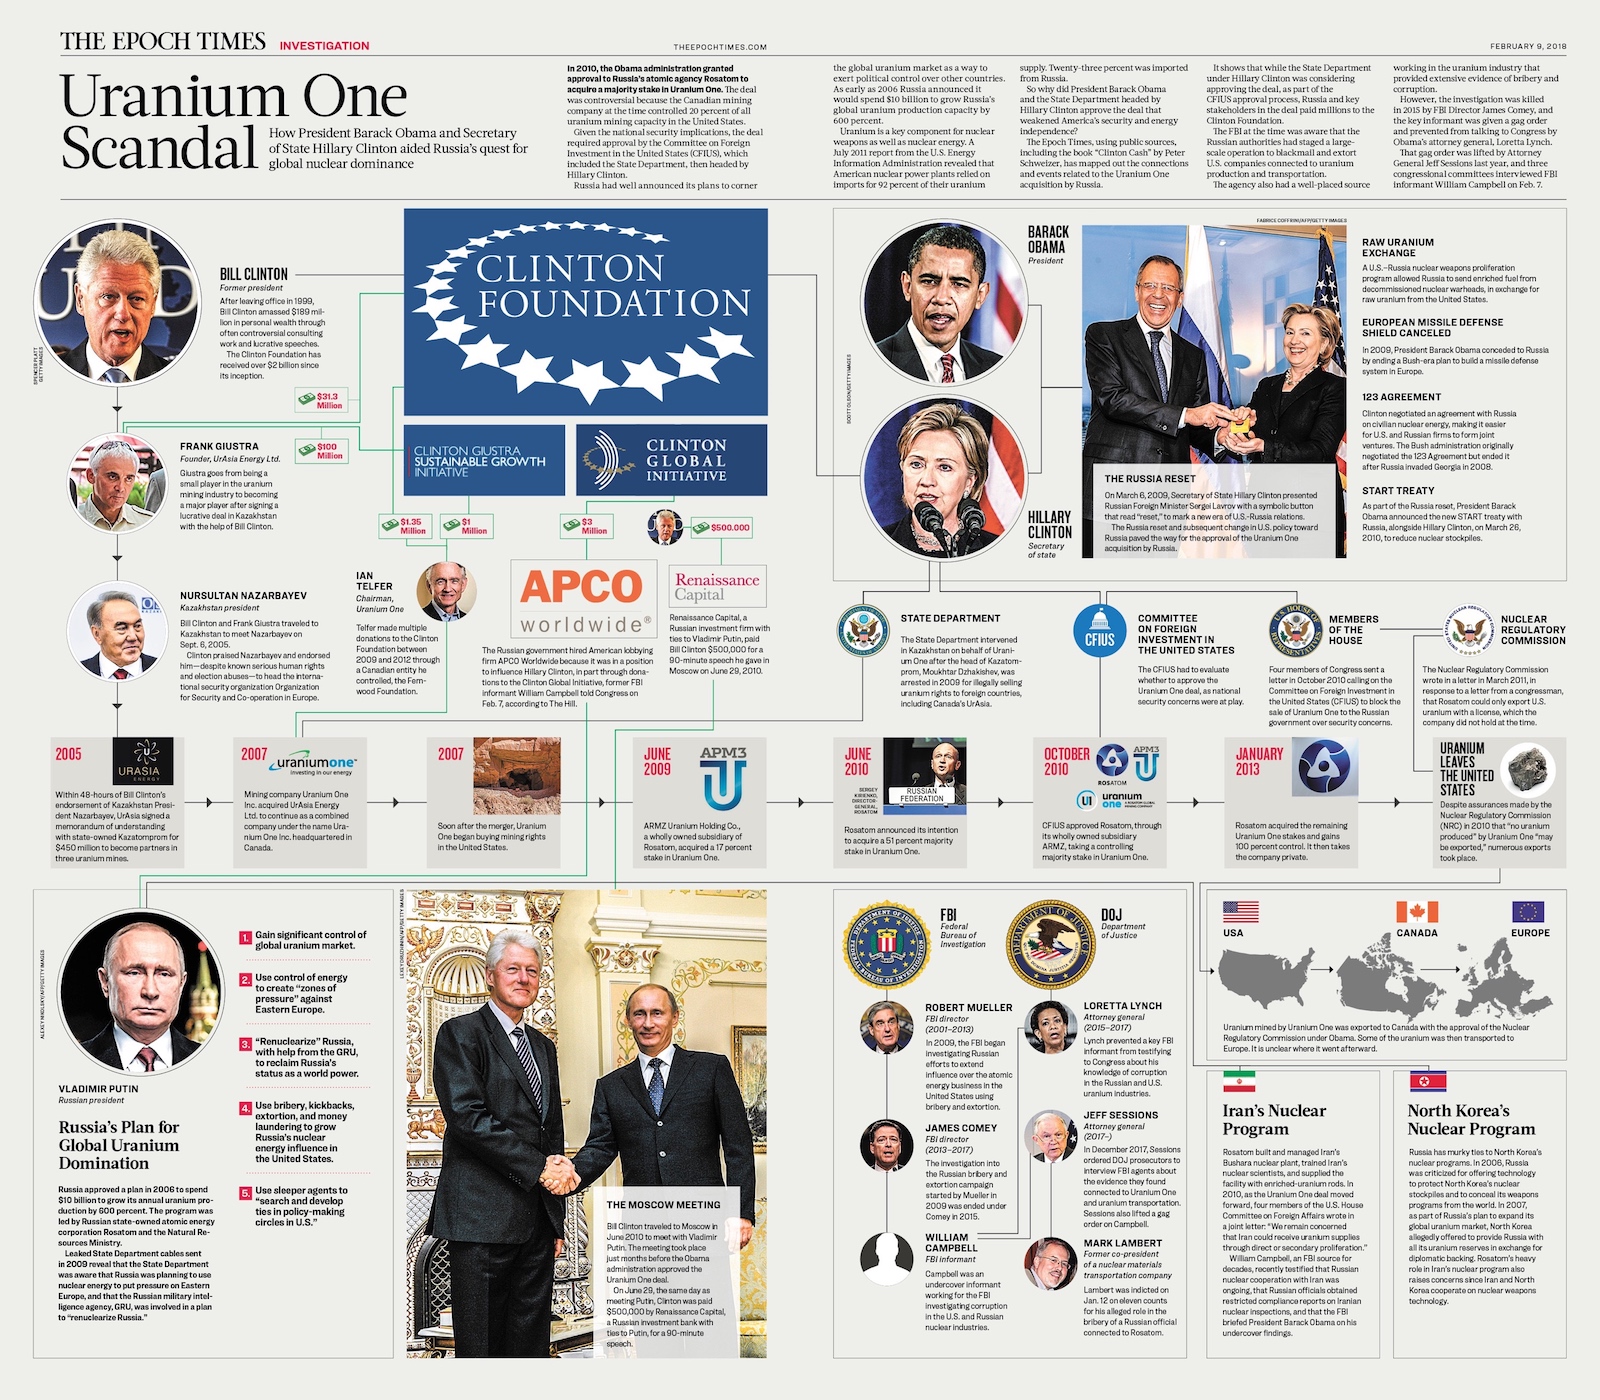 The Clinton - Obama Uranium One Russia Scandal